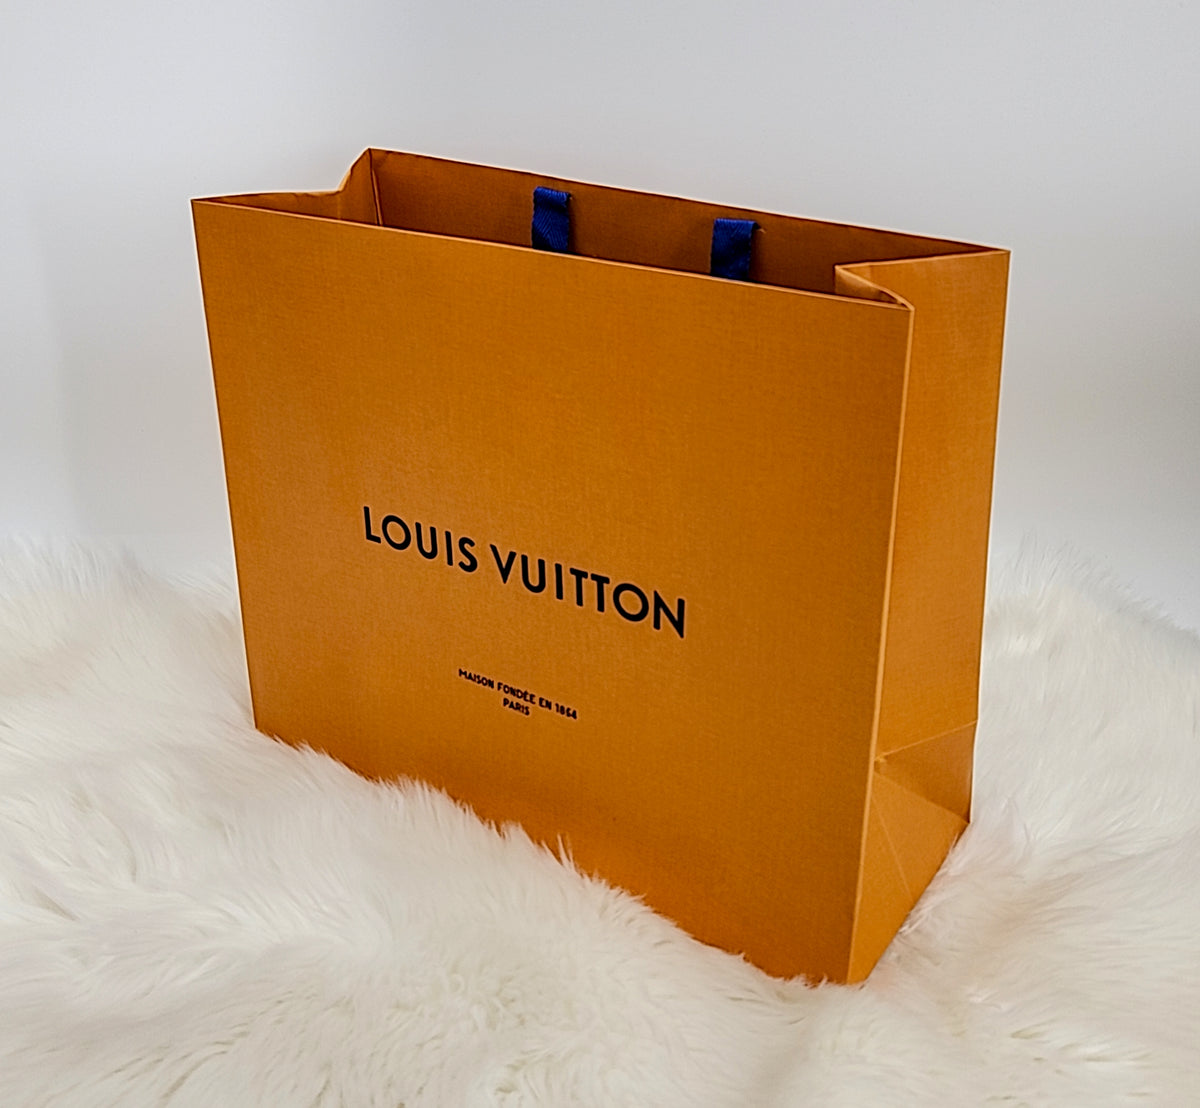 LOUIS VUITTON Orange Shopping Bag / Gift Bag 15.60x13.30x6.30 inches